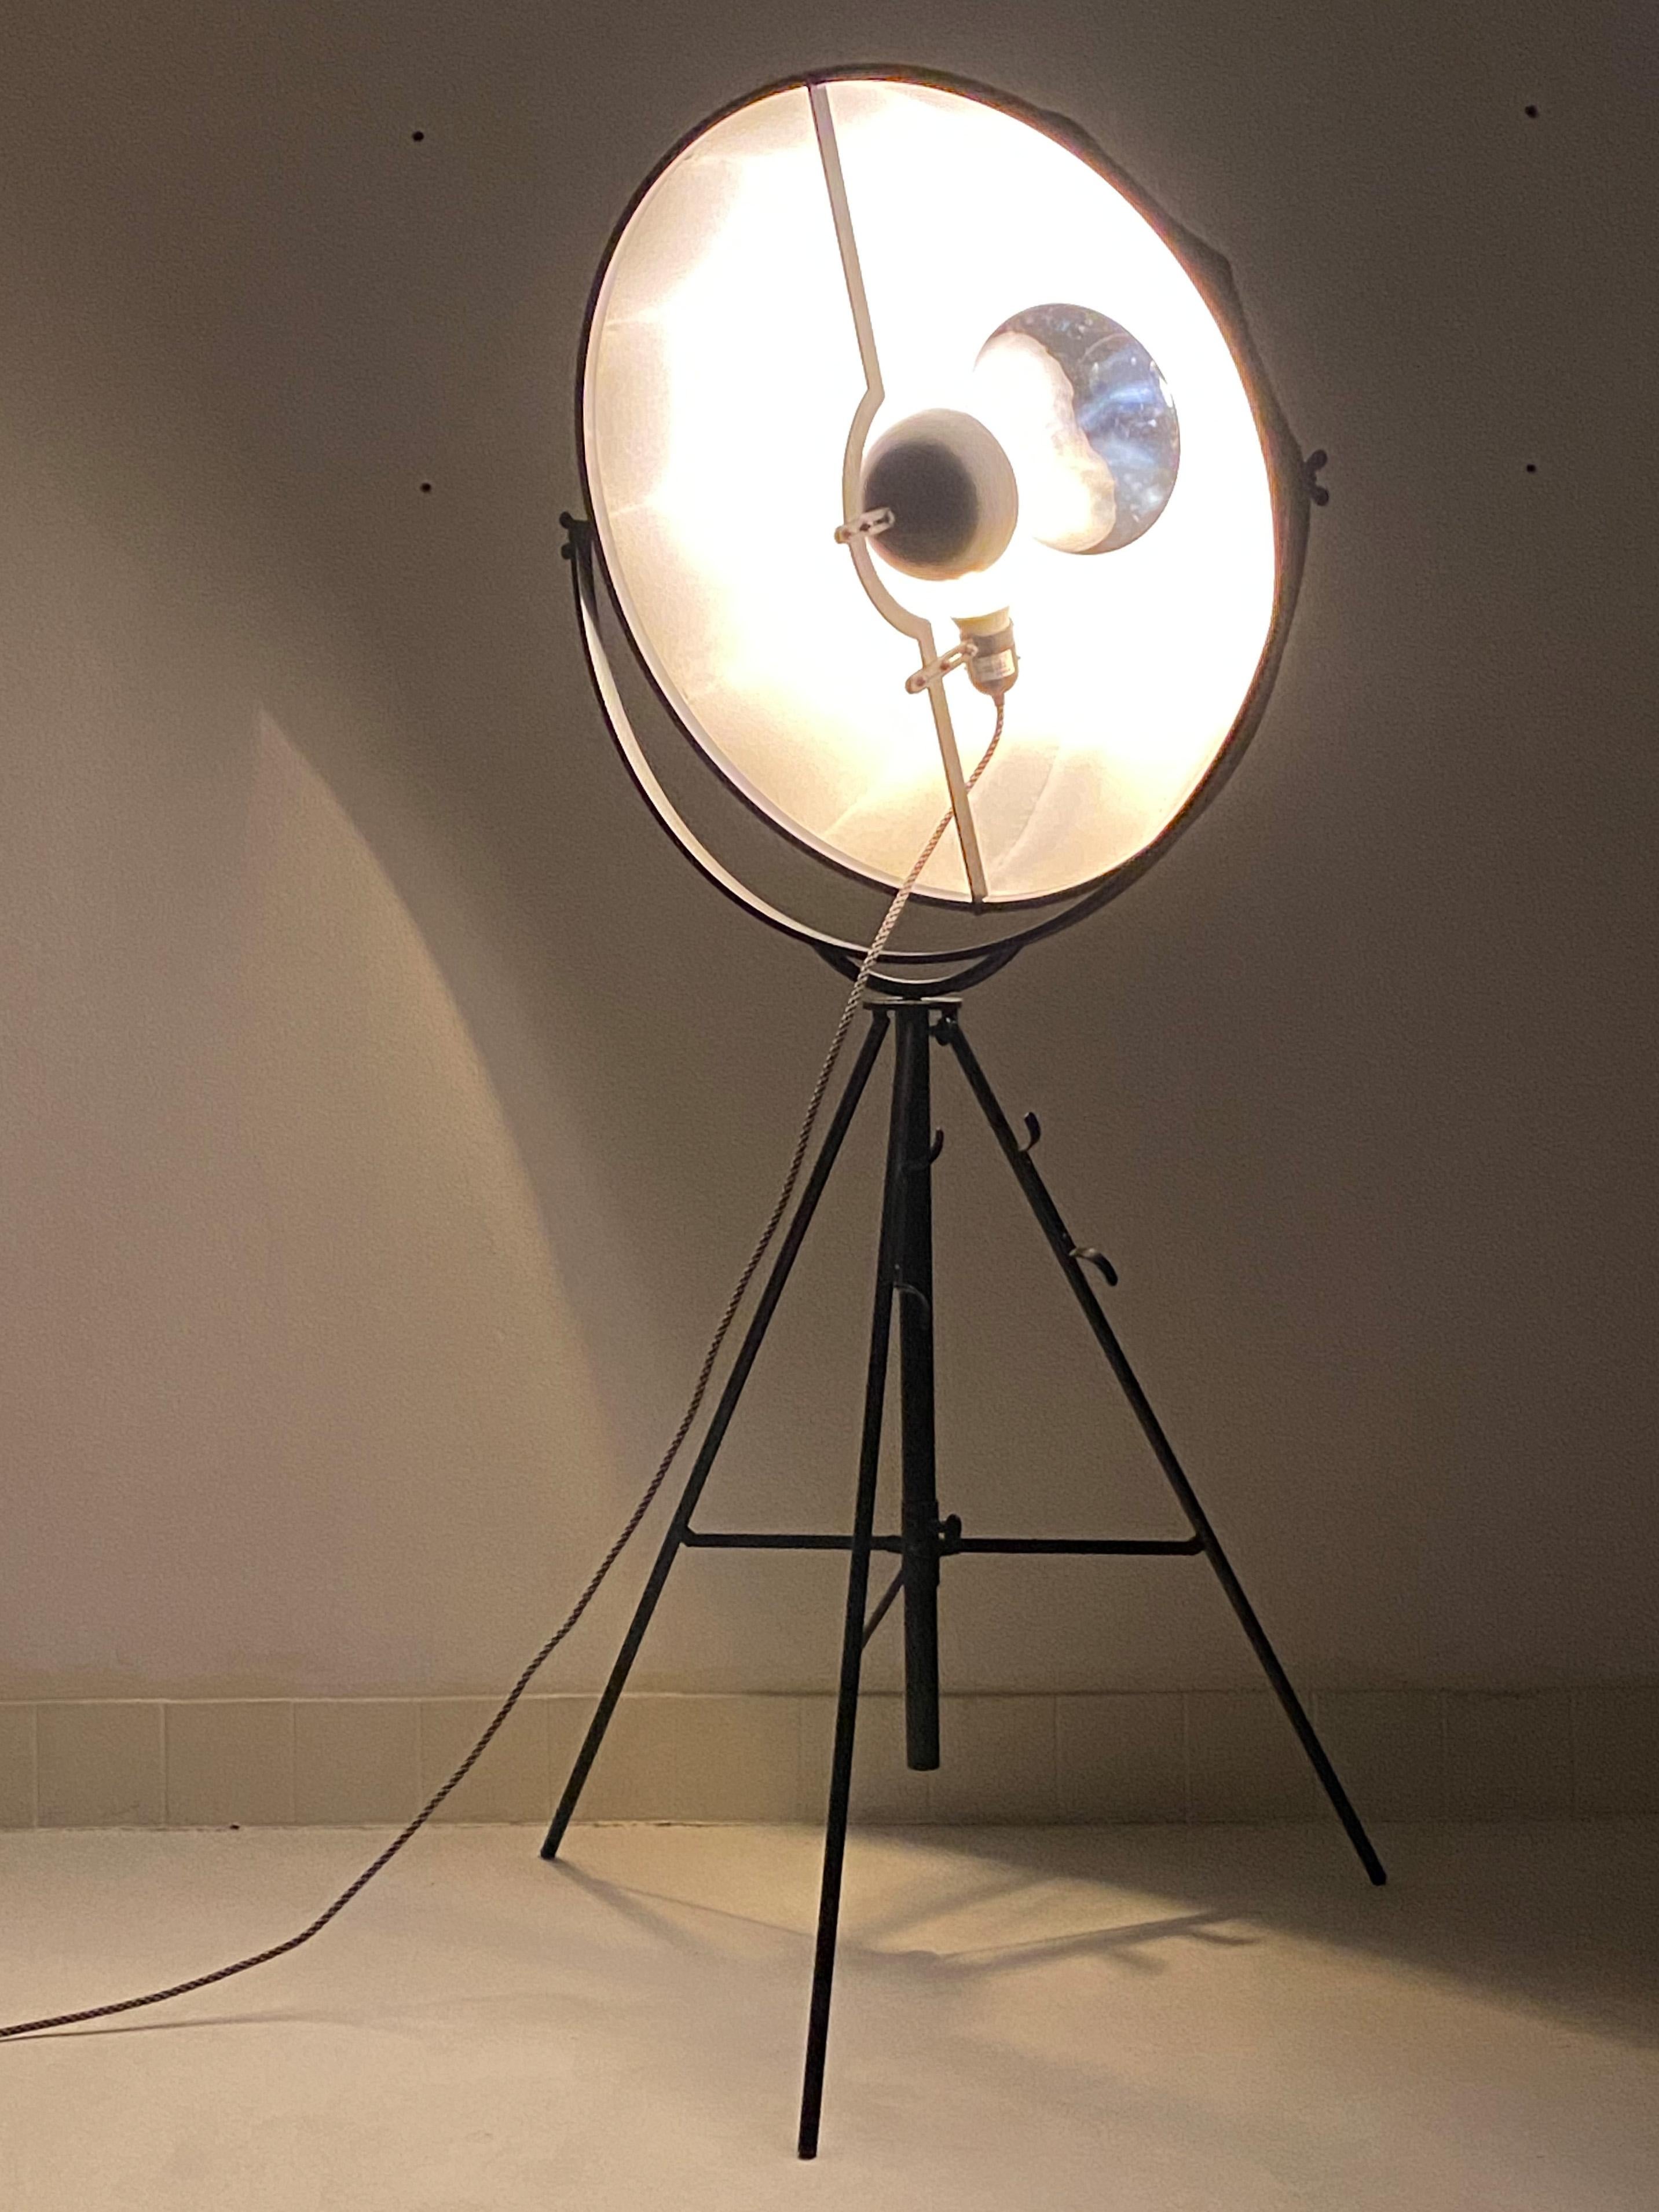 Brass Mariano Fortuny Projecteur 1907 Floor Lamp for Ecart Paris For Sale